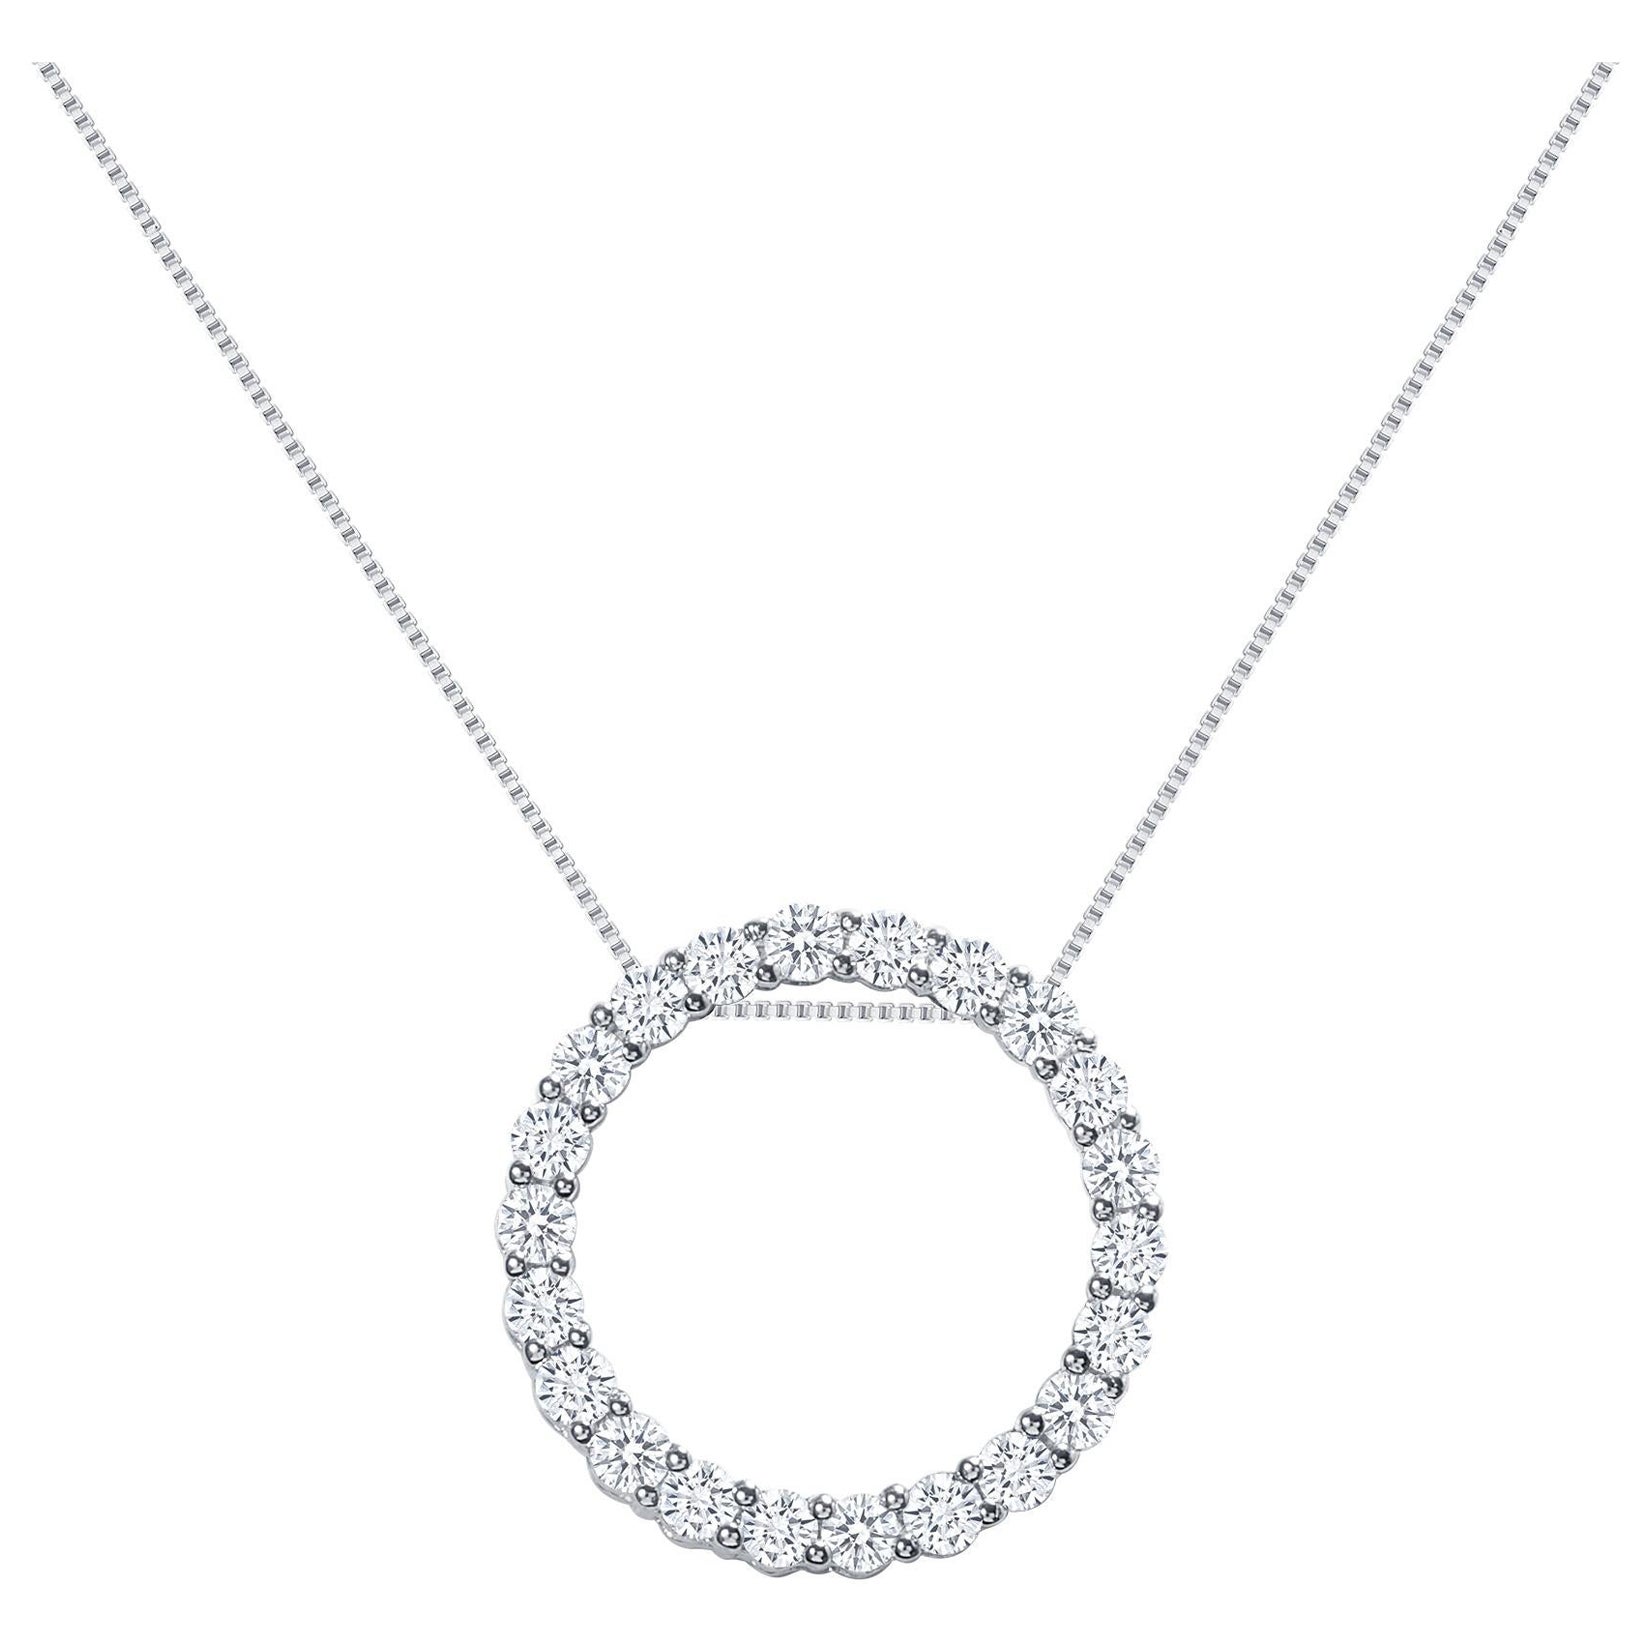 Collier à pendentif circulaire en or blanc 14 carats avec diamants ronds naturels de 3 carats